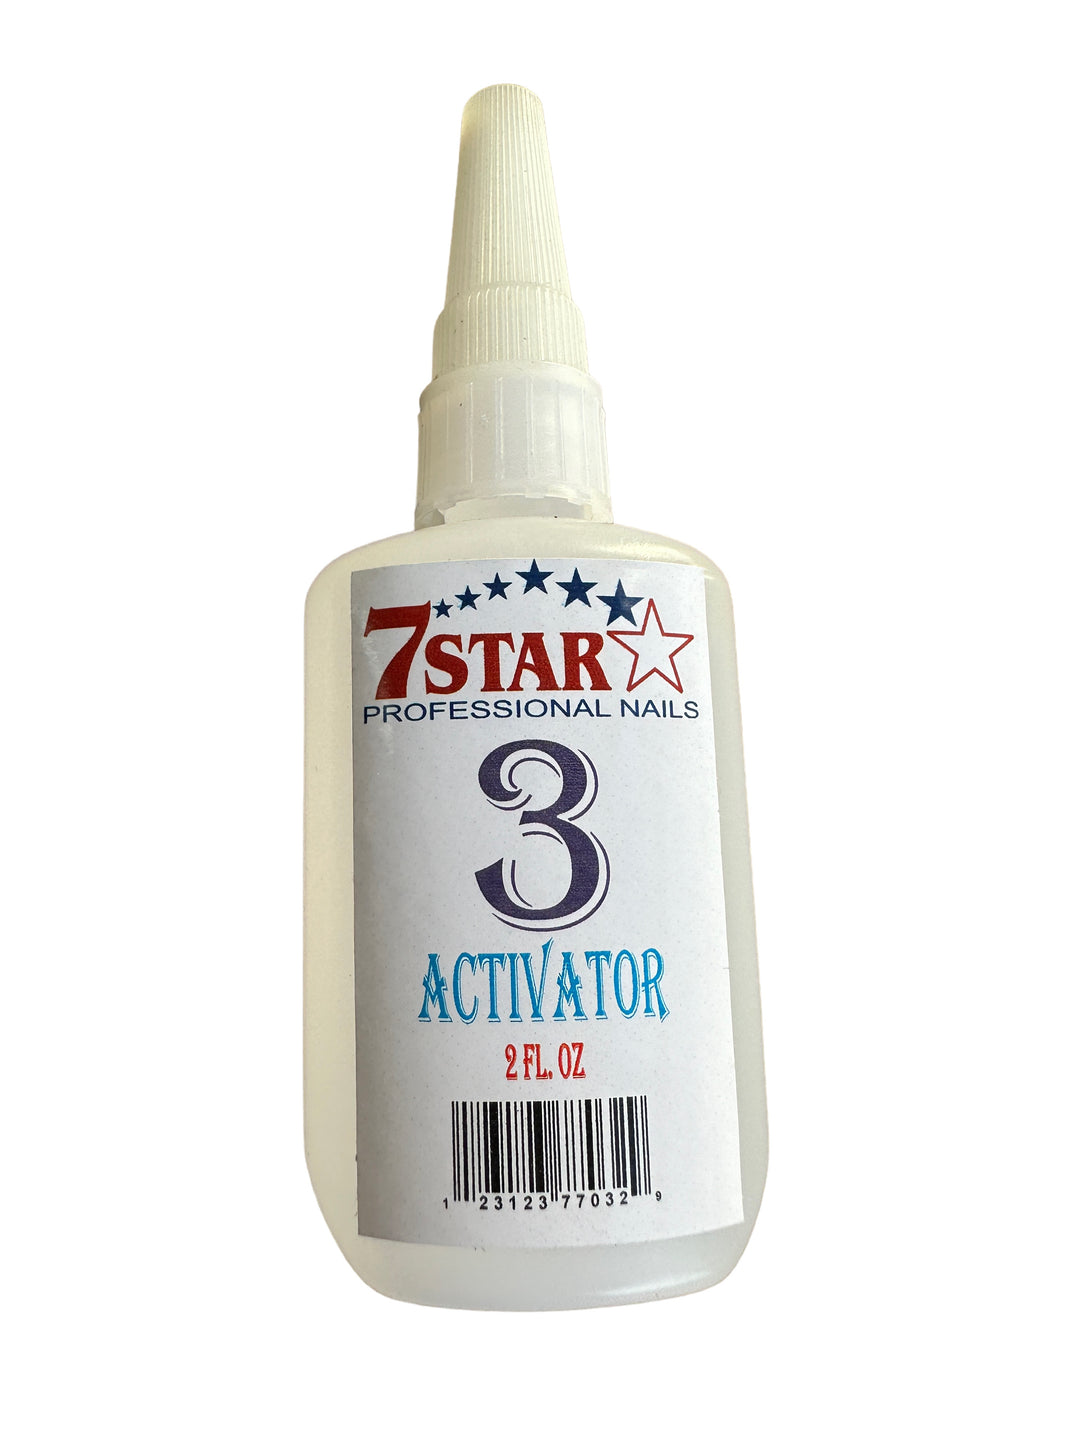 7 Star - Activator (Step 3) - 2oz refill